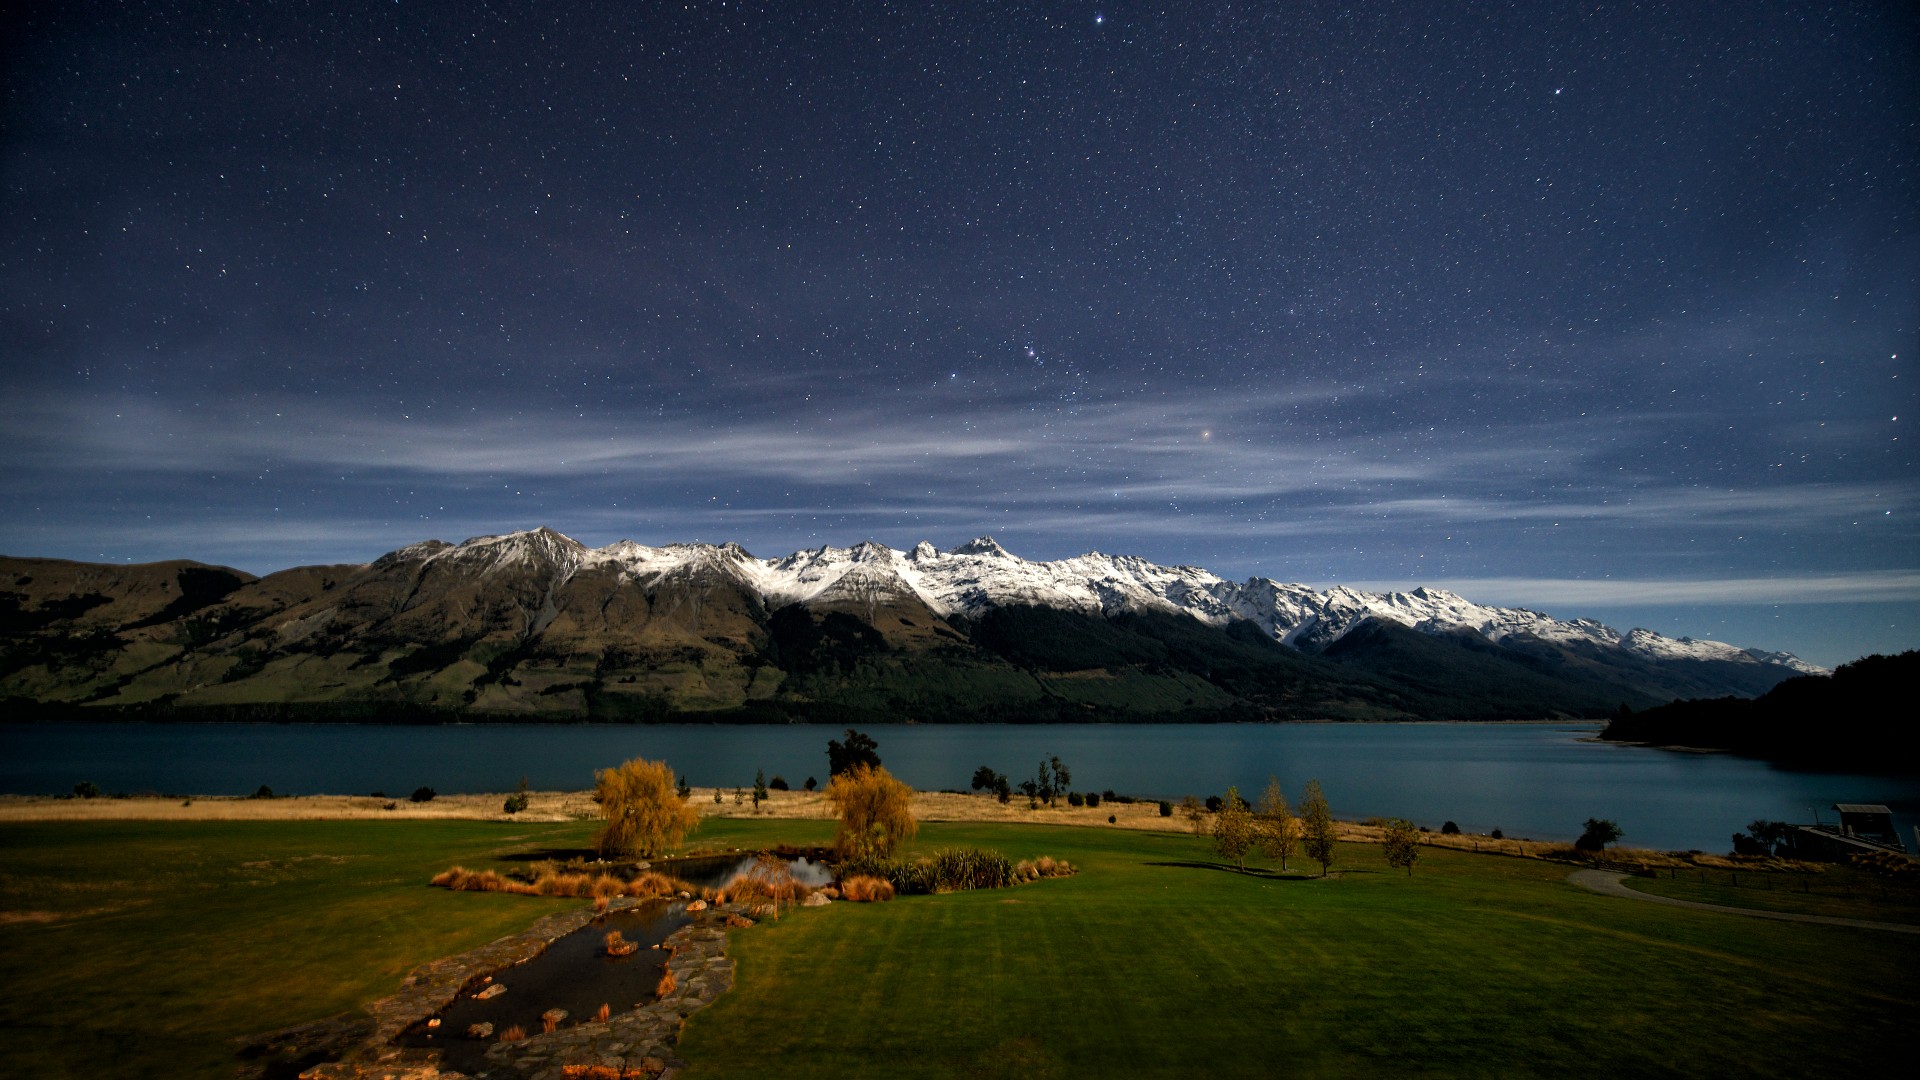 New Zealand, 4k, HD wallpaper, Queenstown, Lake Wakatipu, stars, mountain, snow, green grass, sky, landscape (horizontal)